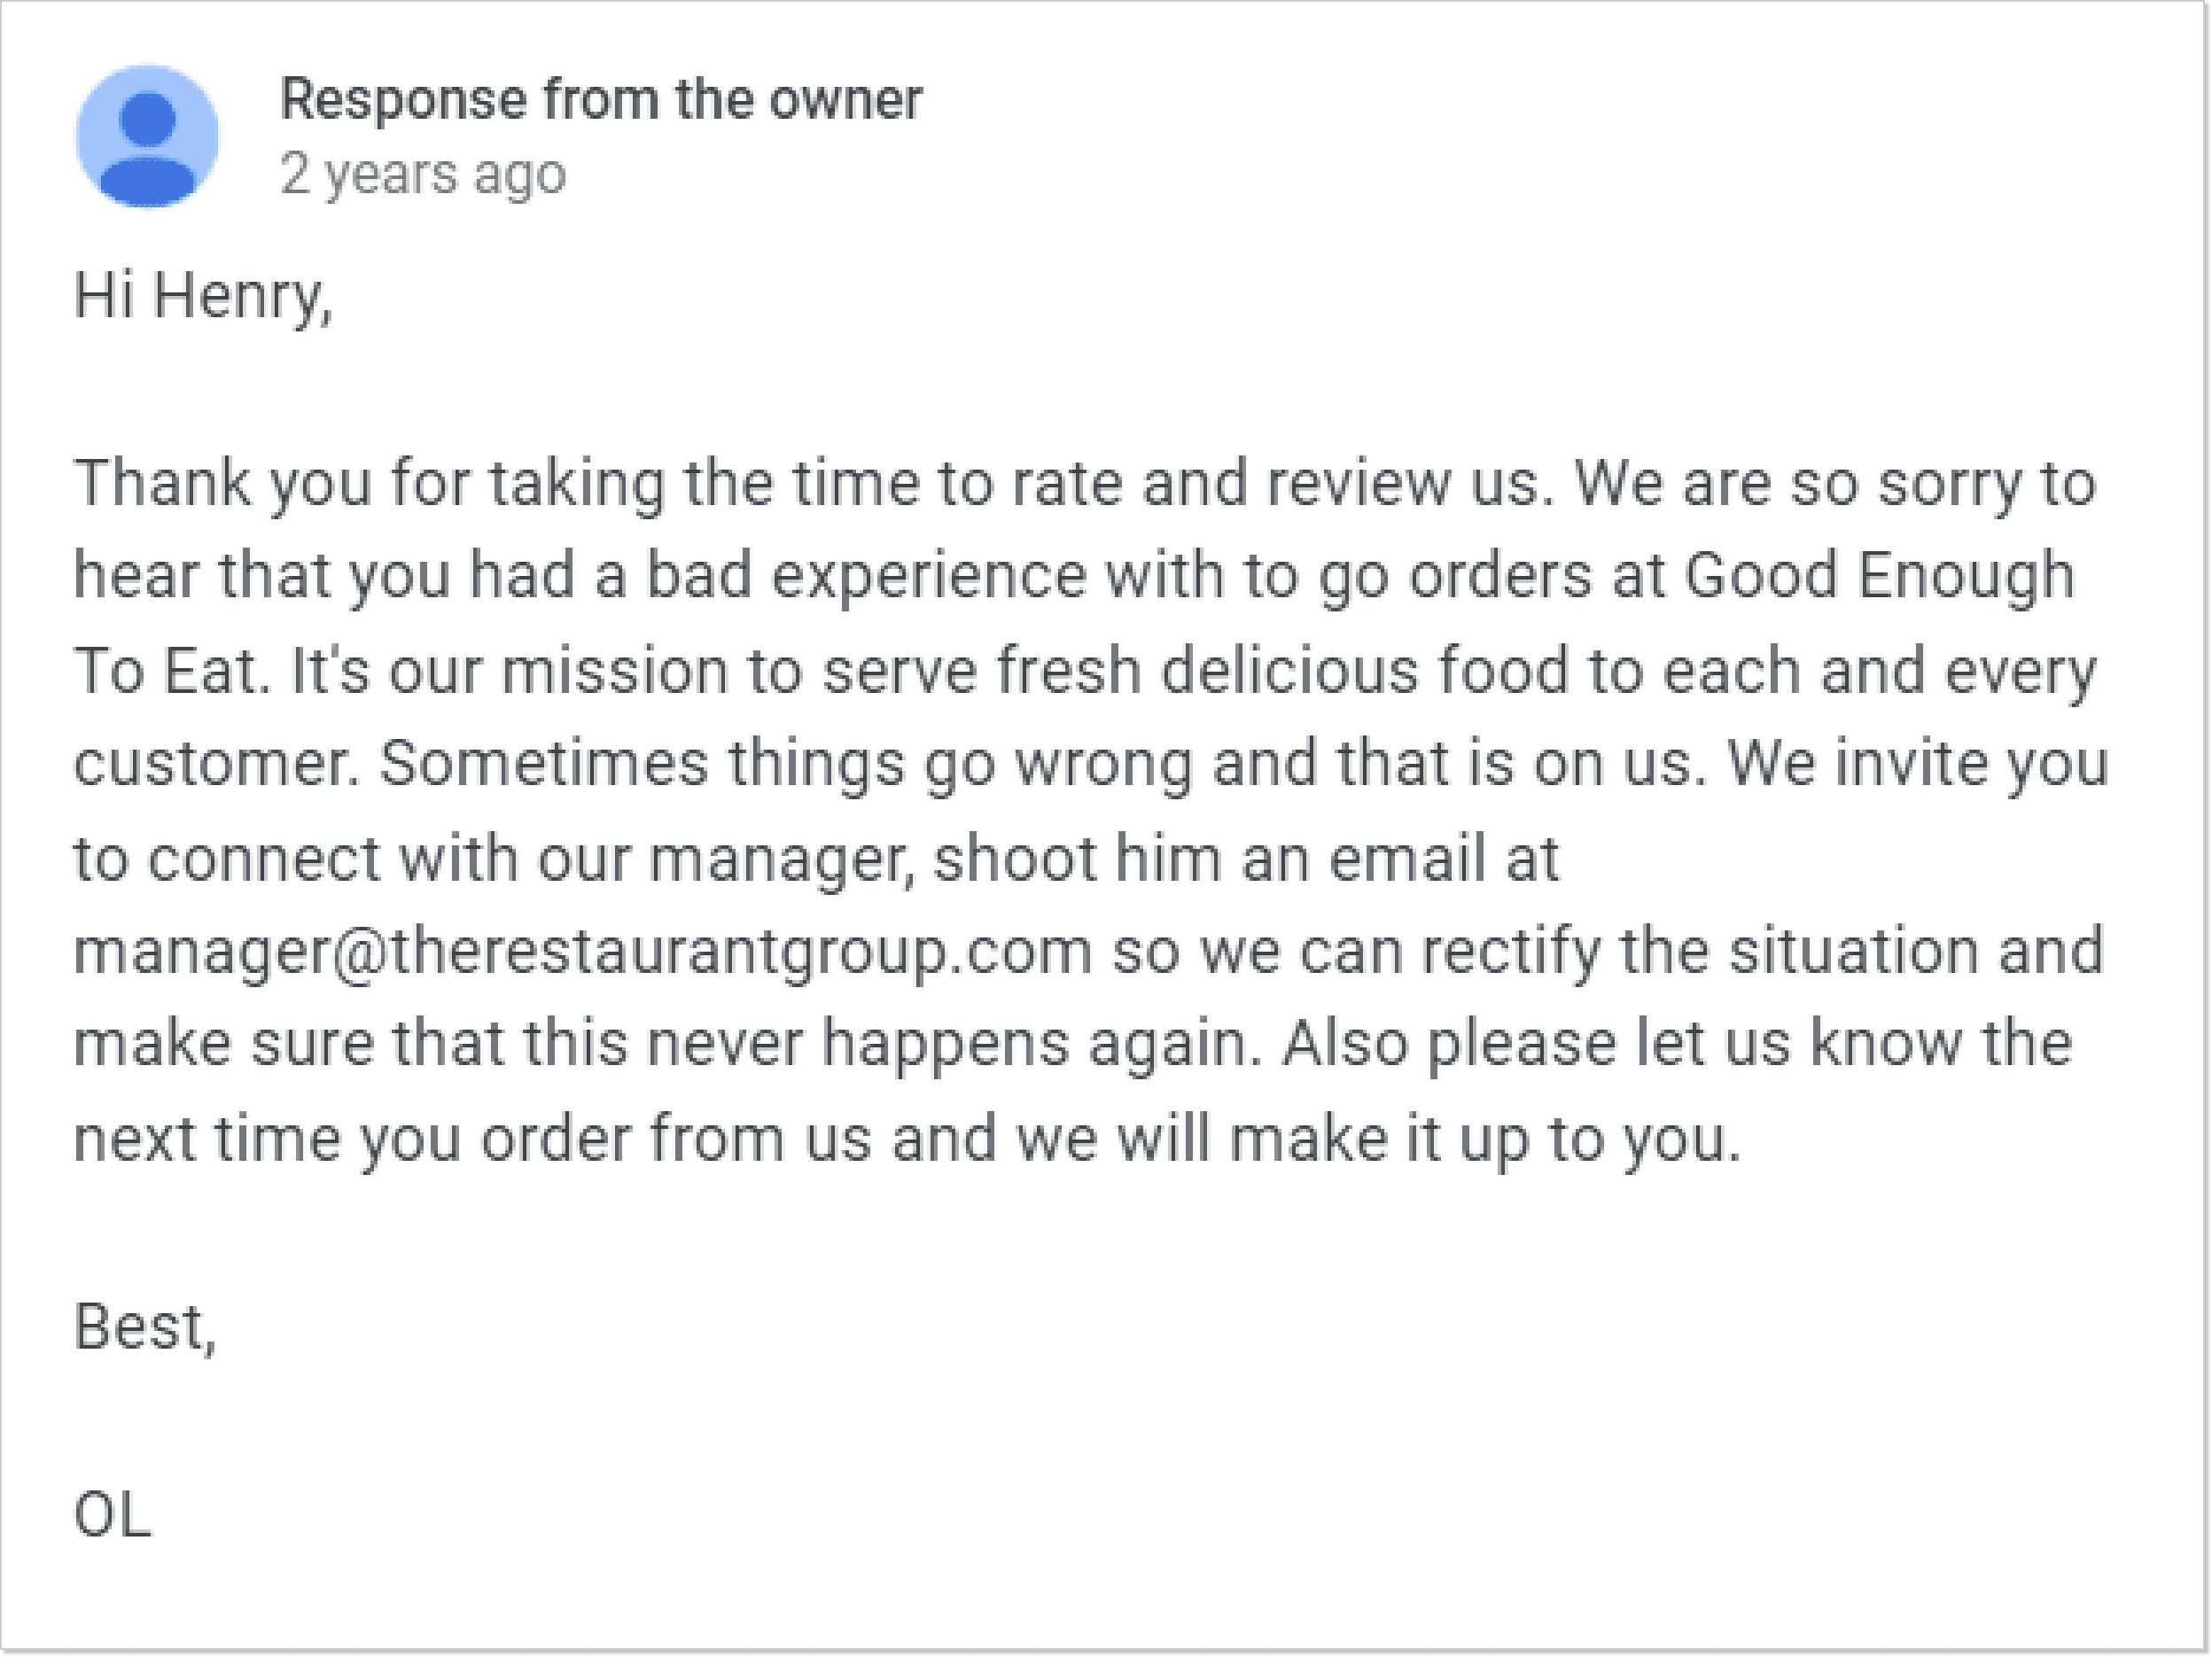 A screenshot of a restaurant responding to customer feedback on Google Reviews.